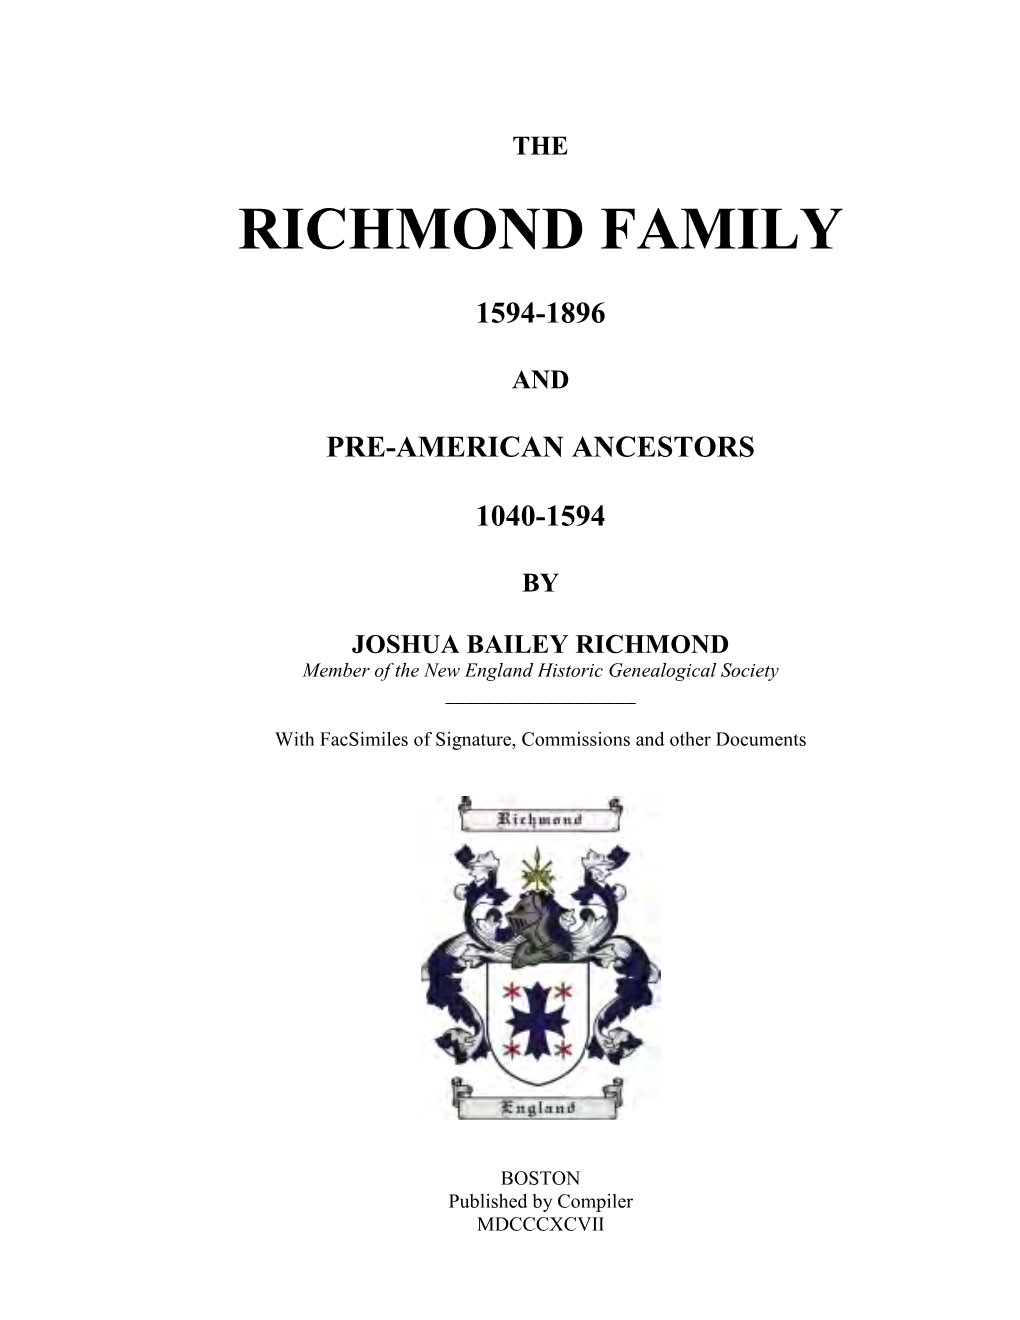 Richmond Family